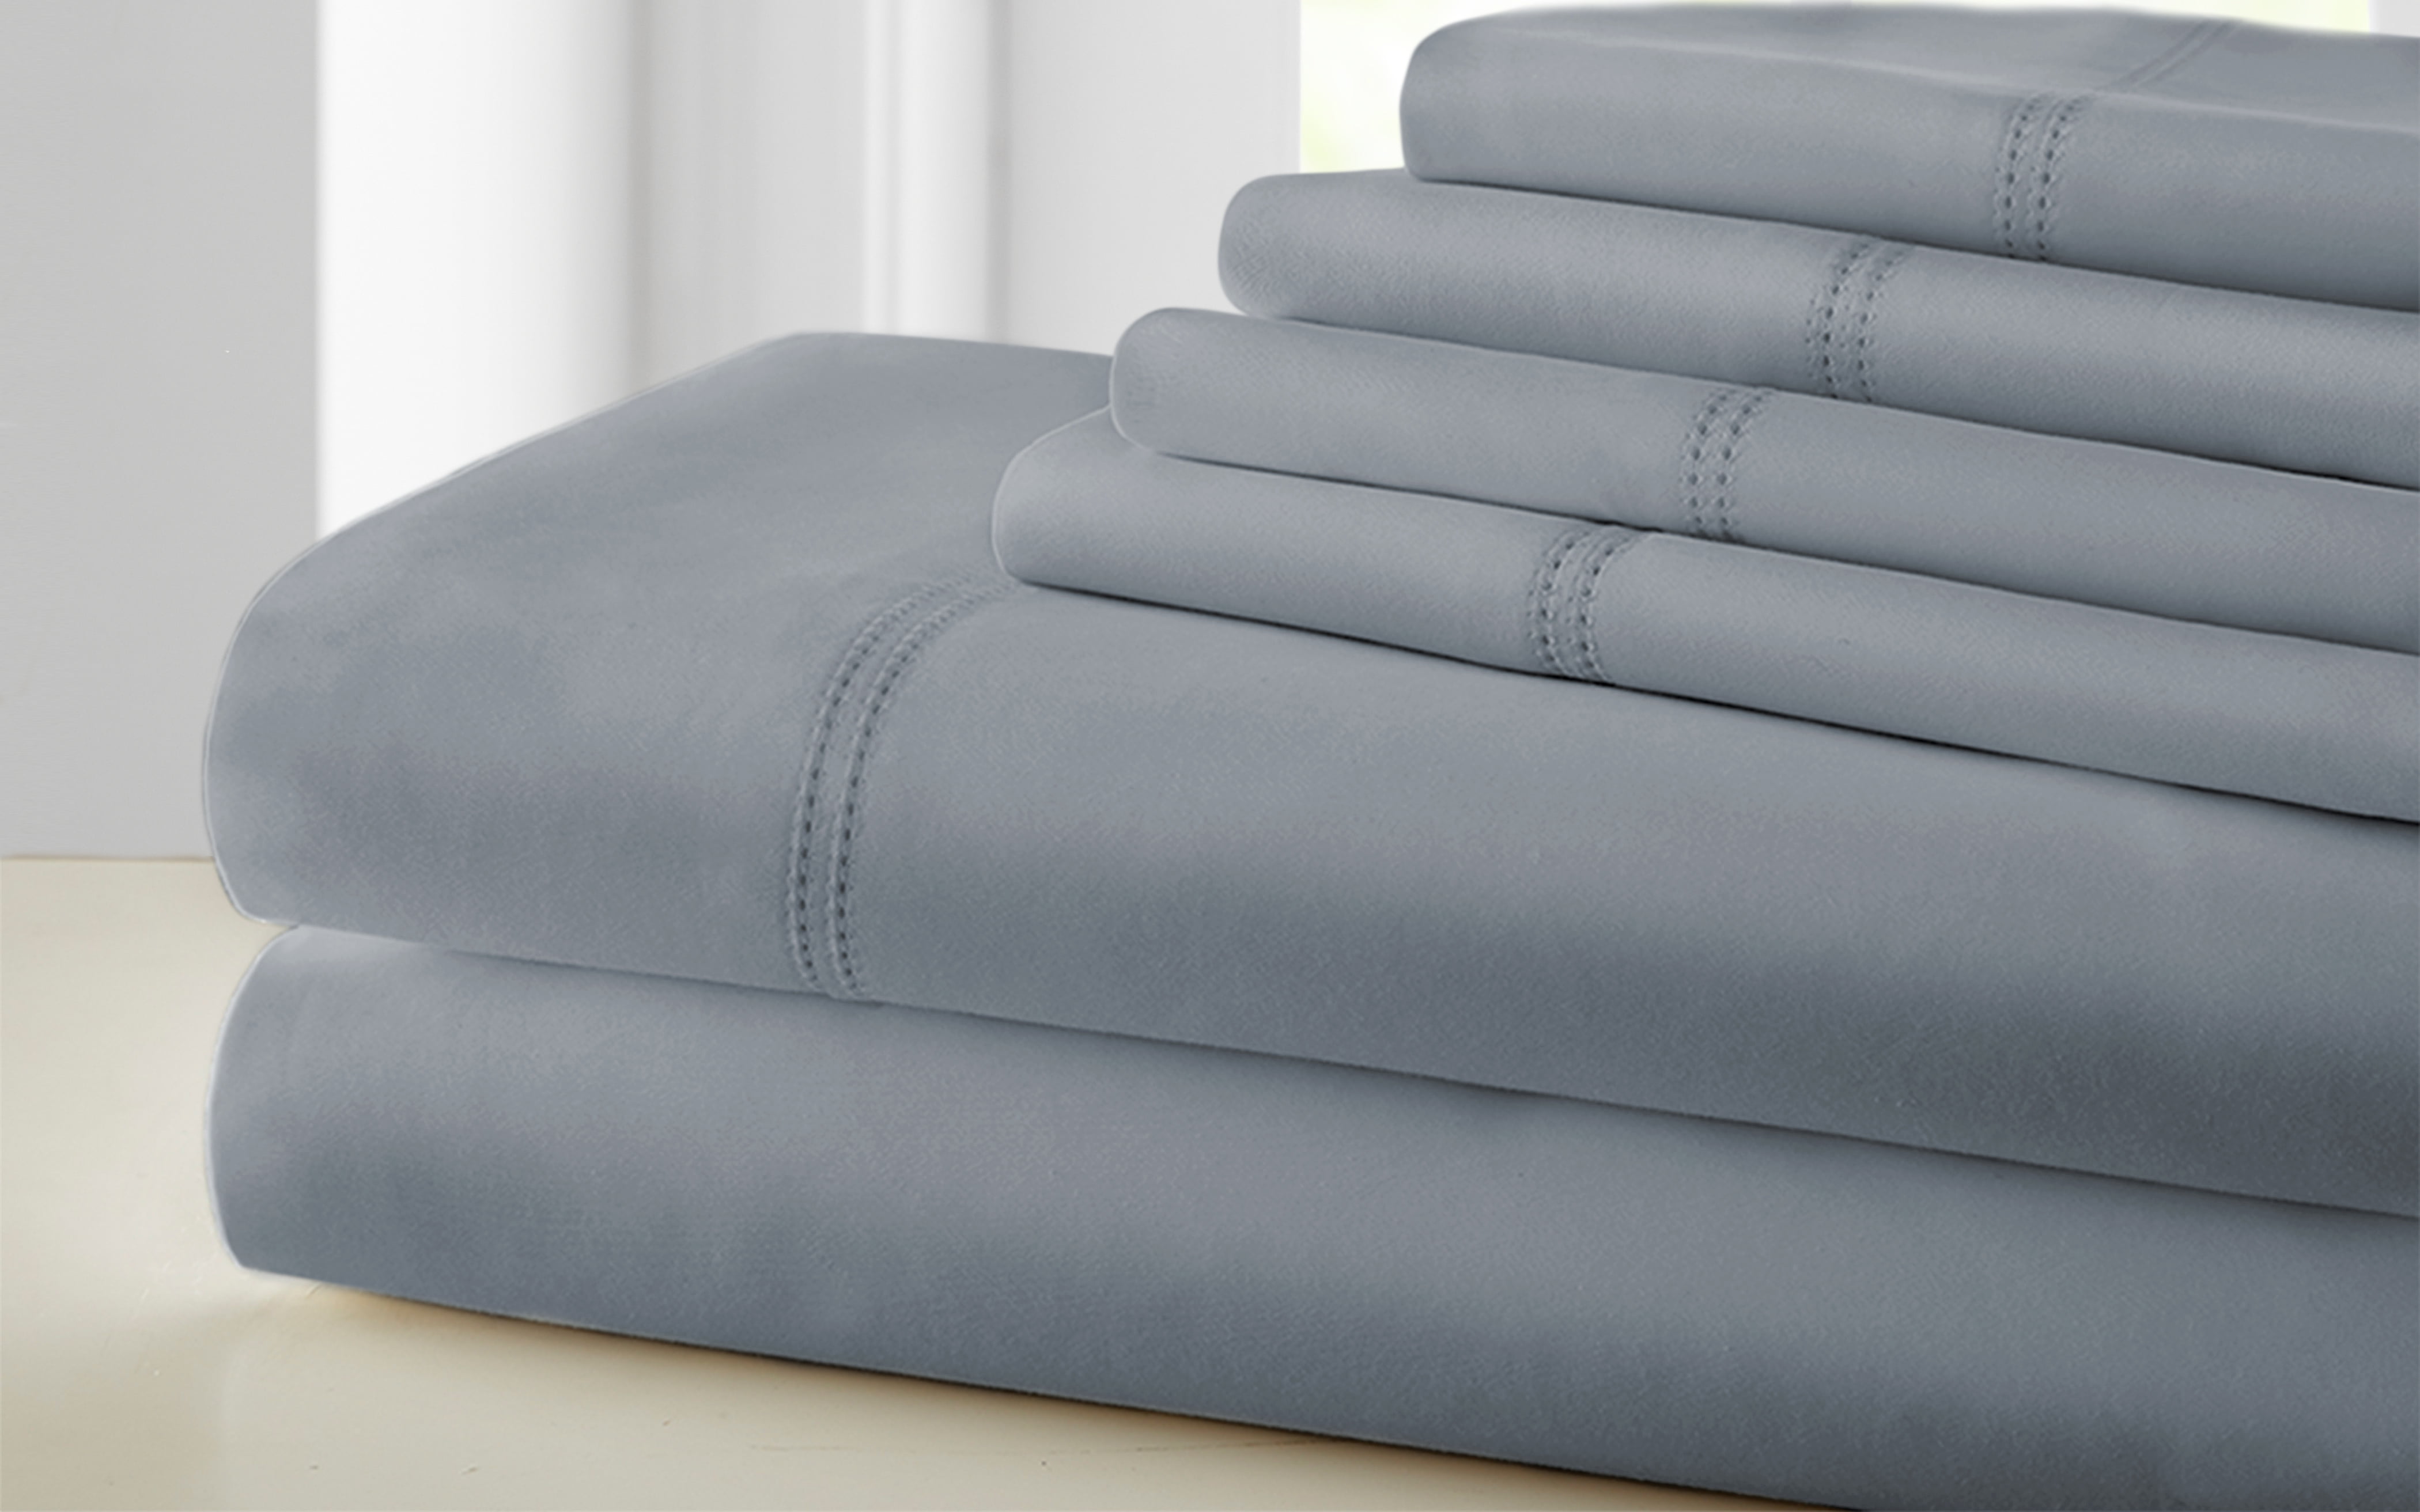 queen cotton sheets for 16 inch mattress